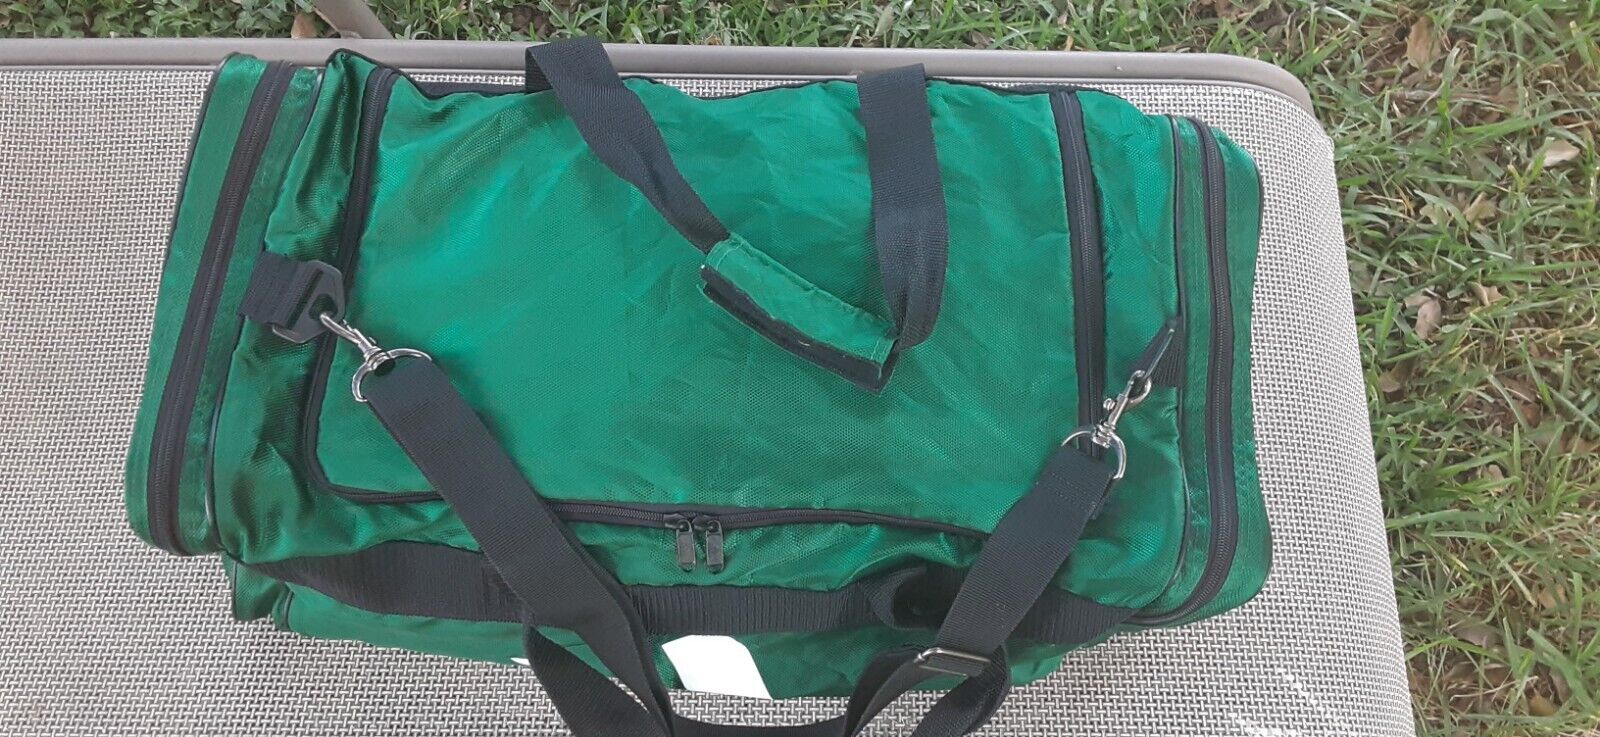 Adidas Large Vintage Green Duffel / Sports/ Travel Bag W/side Pockets Euc